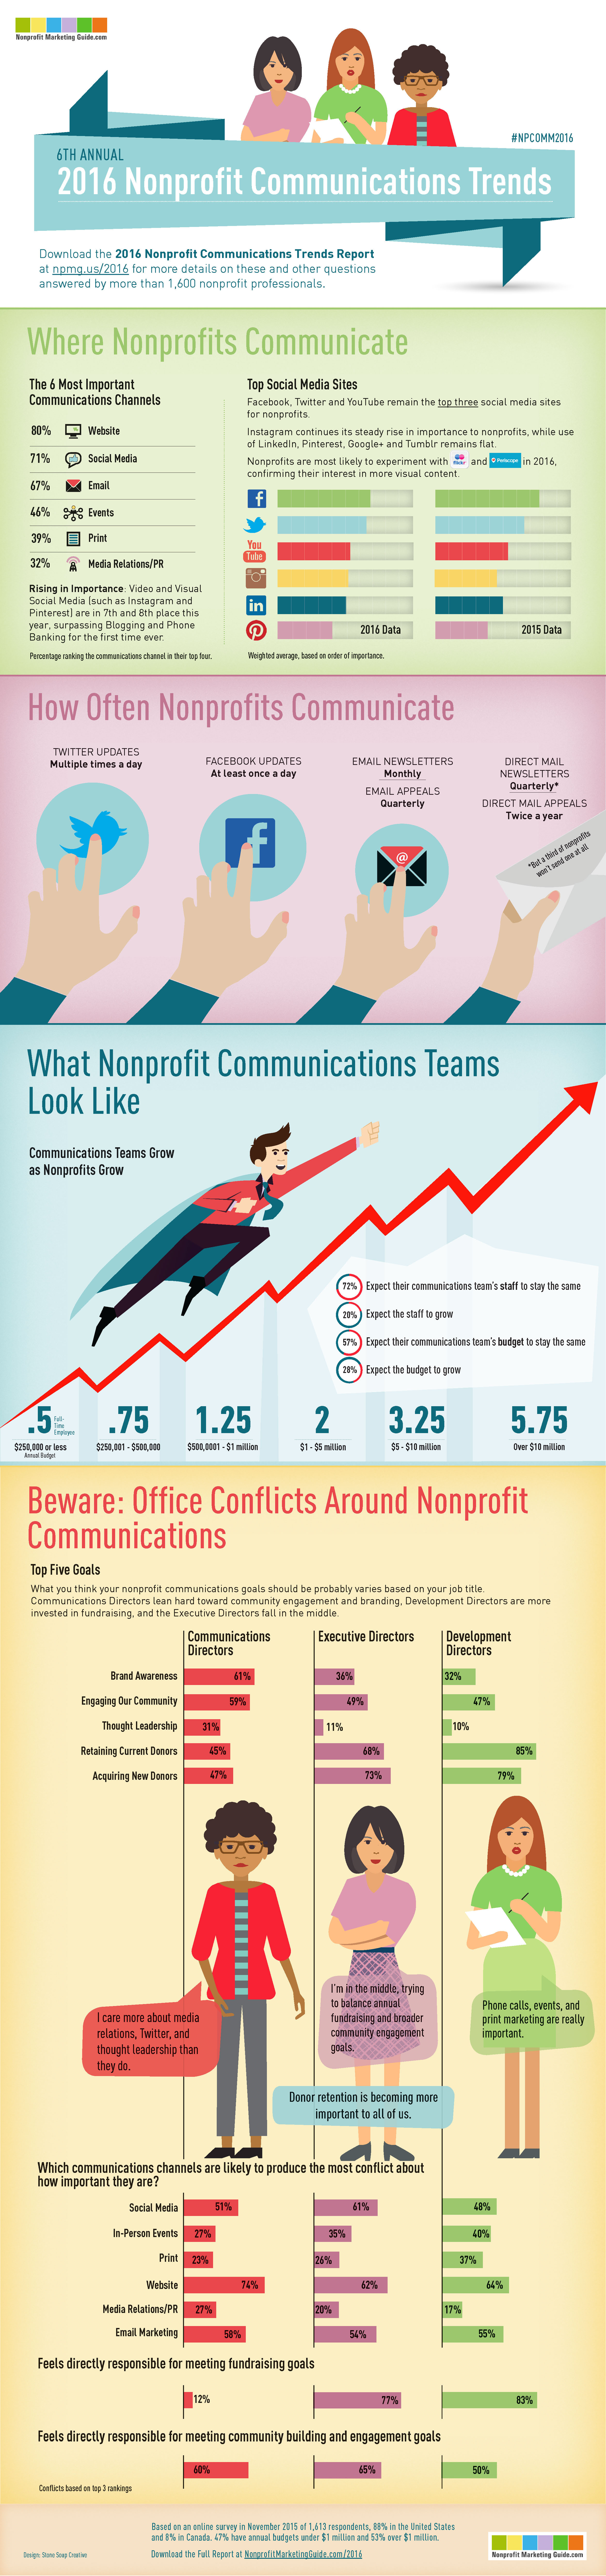 2016-Nonprofit-Communications-Trends-Infographic.jpg